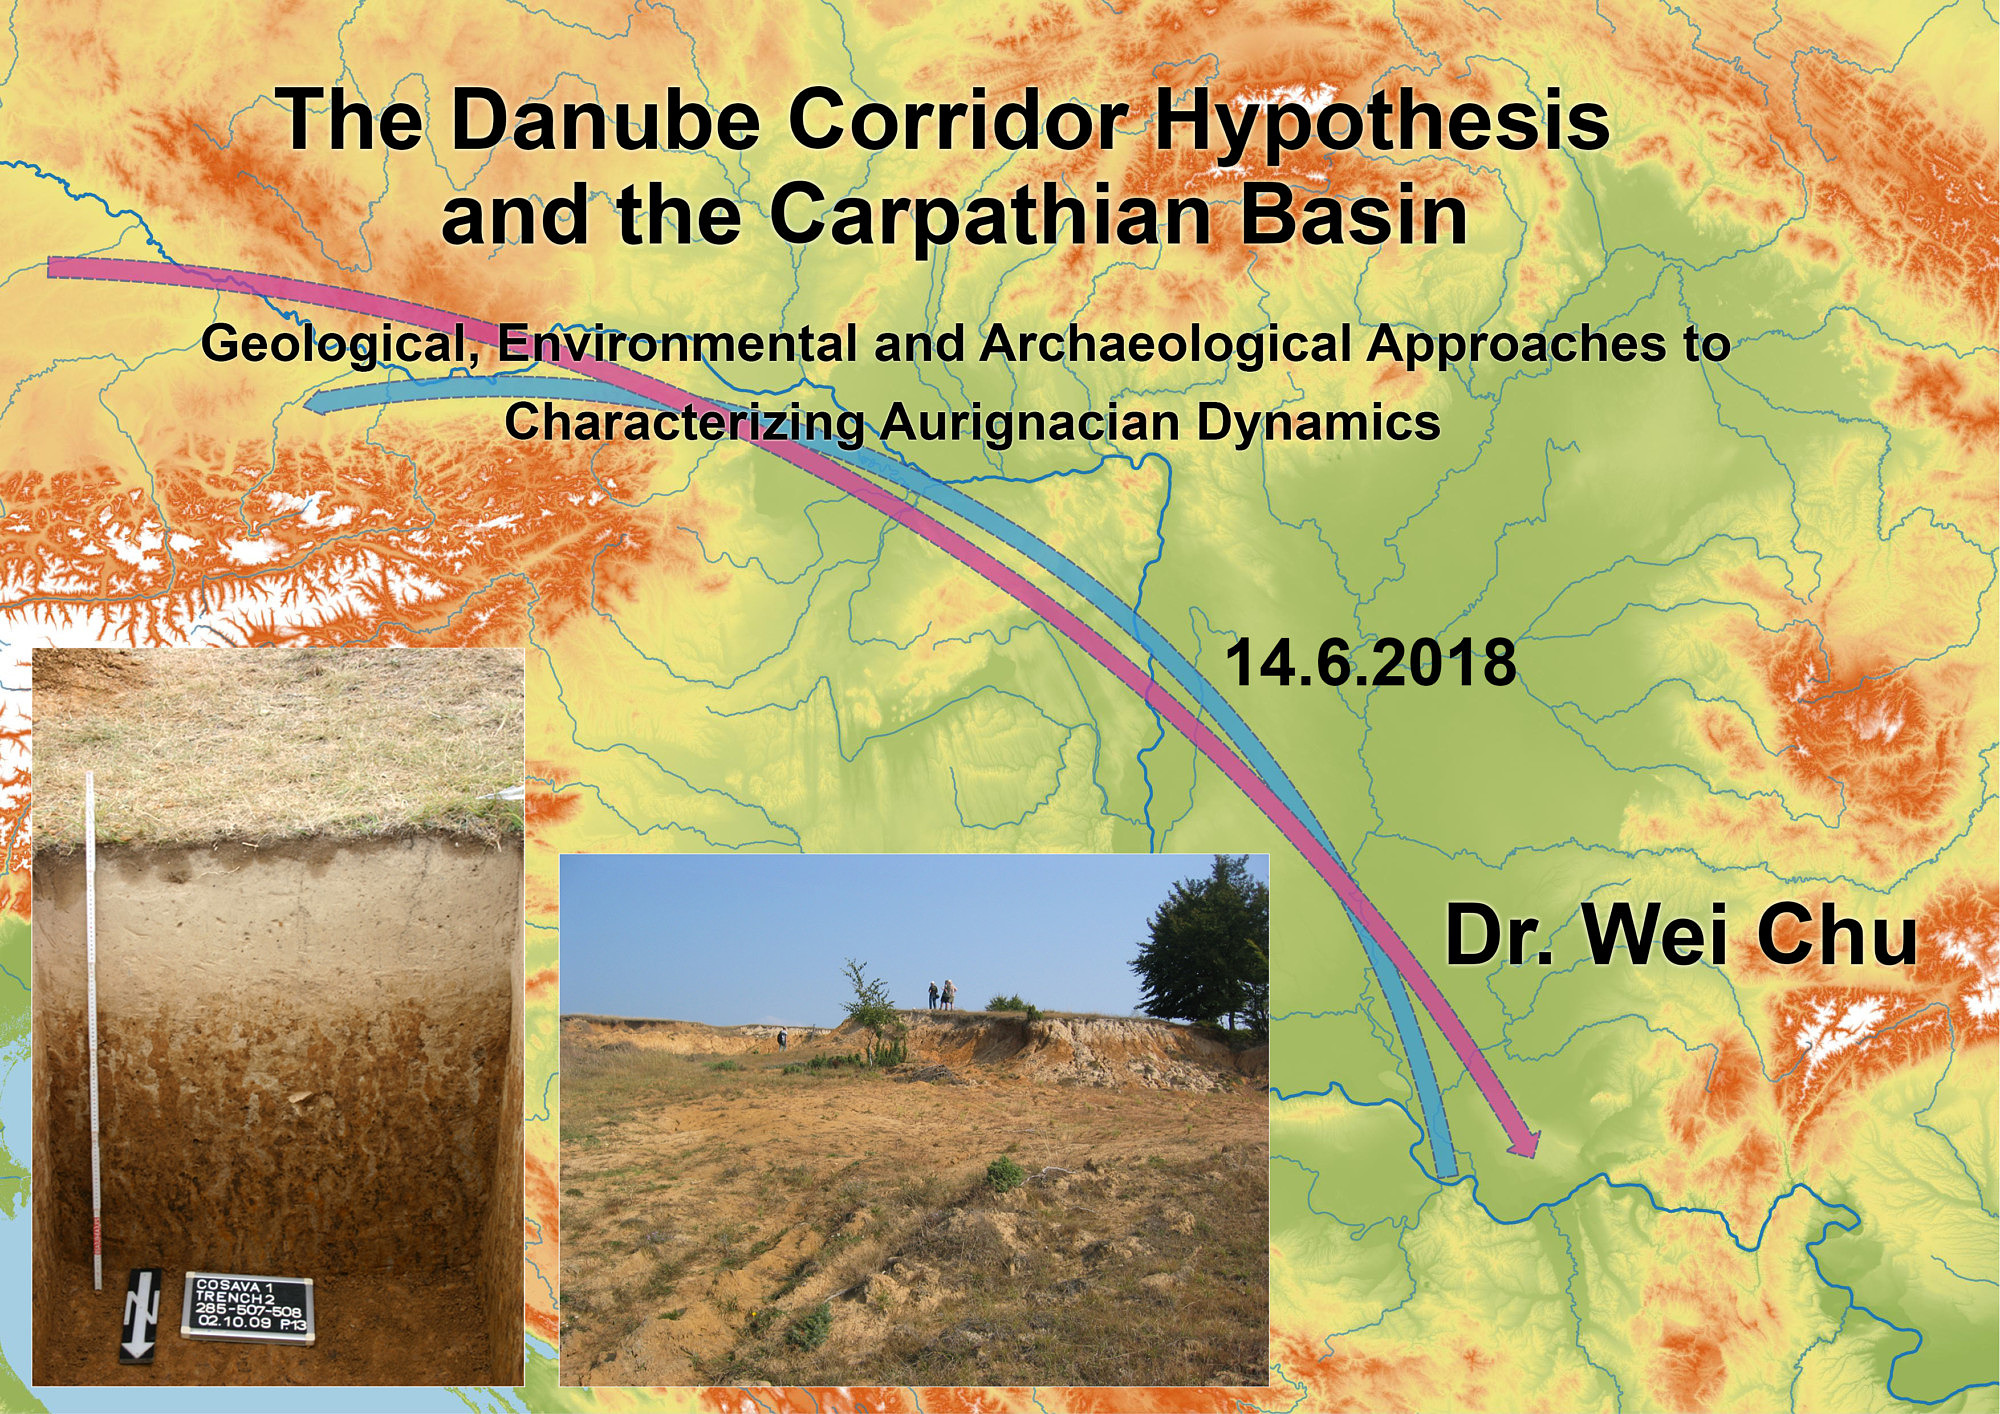 The Danube Corridor Hypothesis and the Carpathian Basin